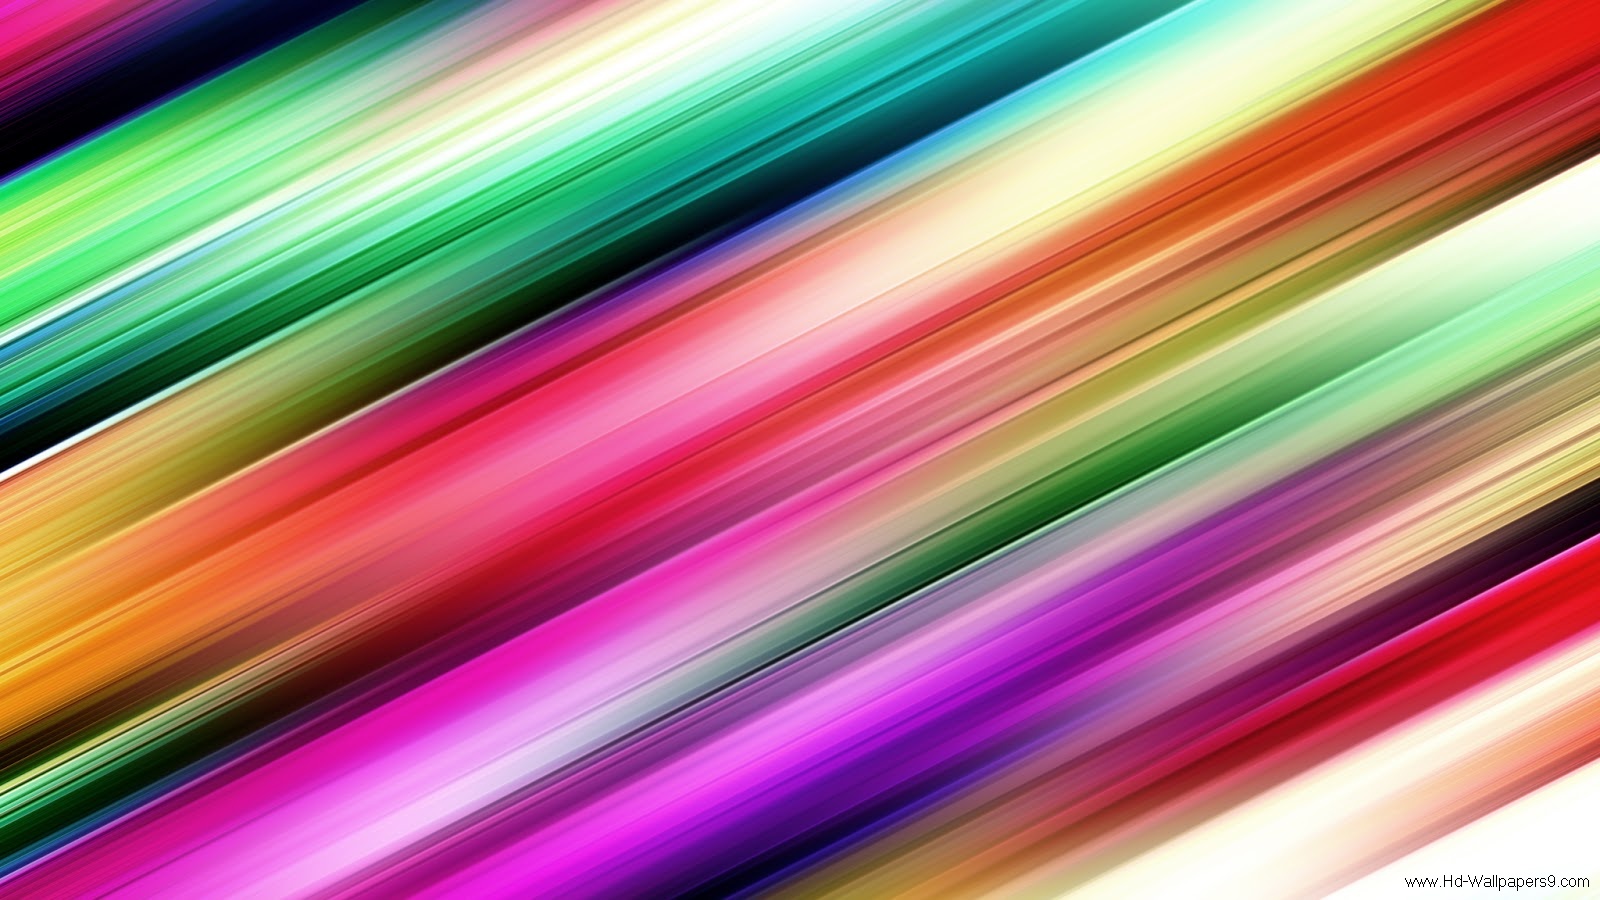 Rainbow Desktop Wallpaper Photos Image